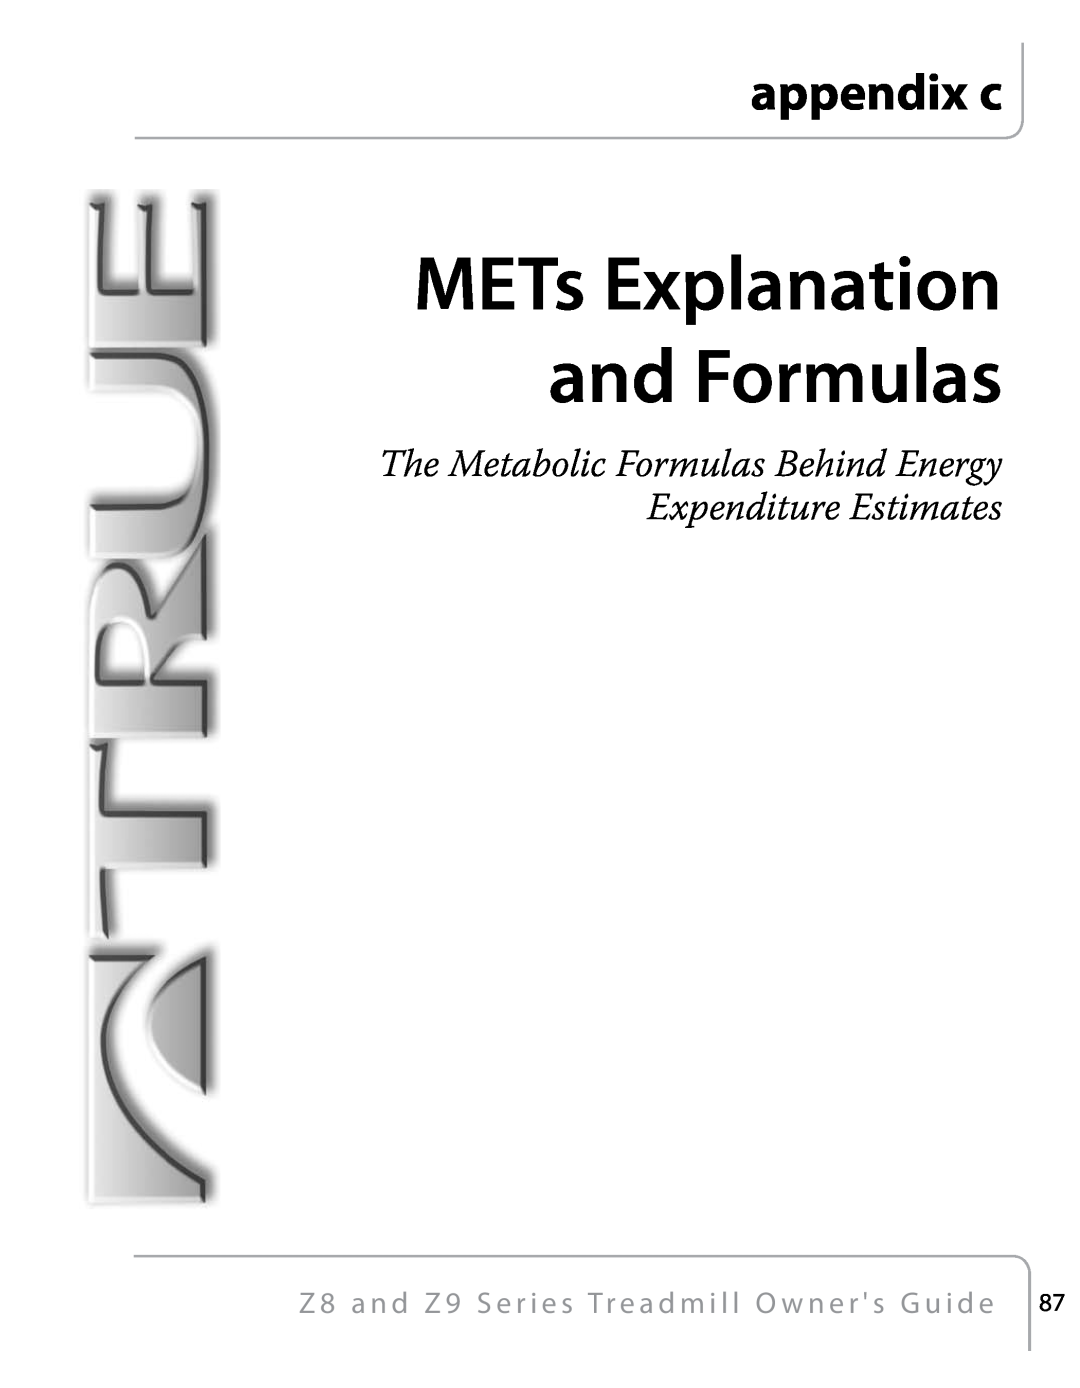 True Fitness Z9, Z8 appendix c, METs Explanation and Formulas, The Metabolic Formulas Behind Energy Expenditure Estimates 